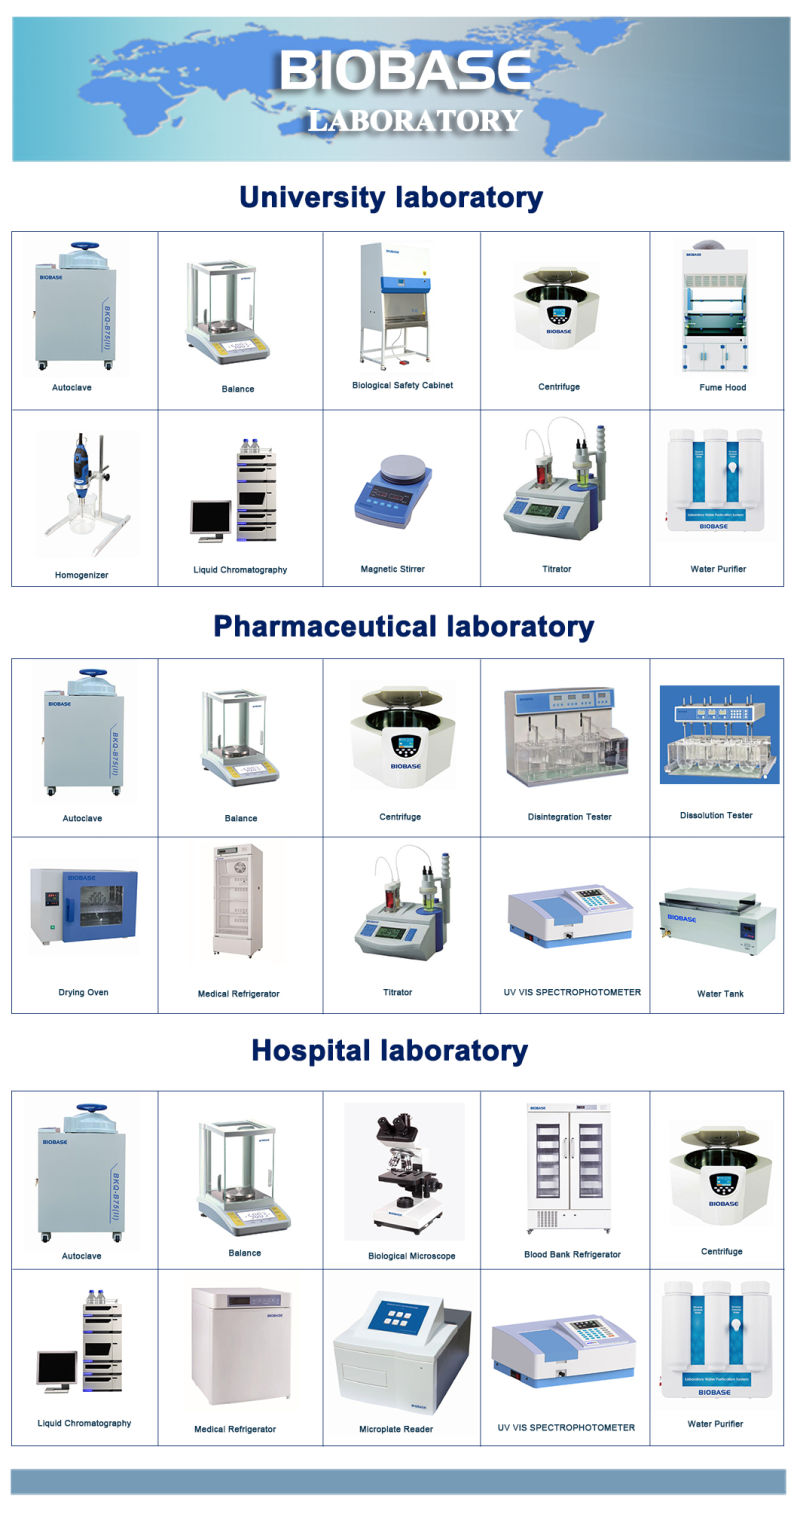 Biobase Bk-5000 Veterinary Fully Automatic Auto Hematology Analyzer